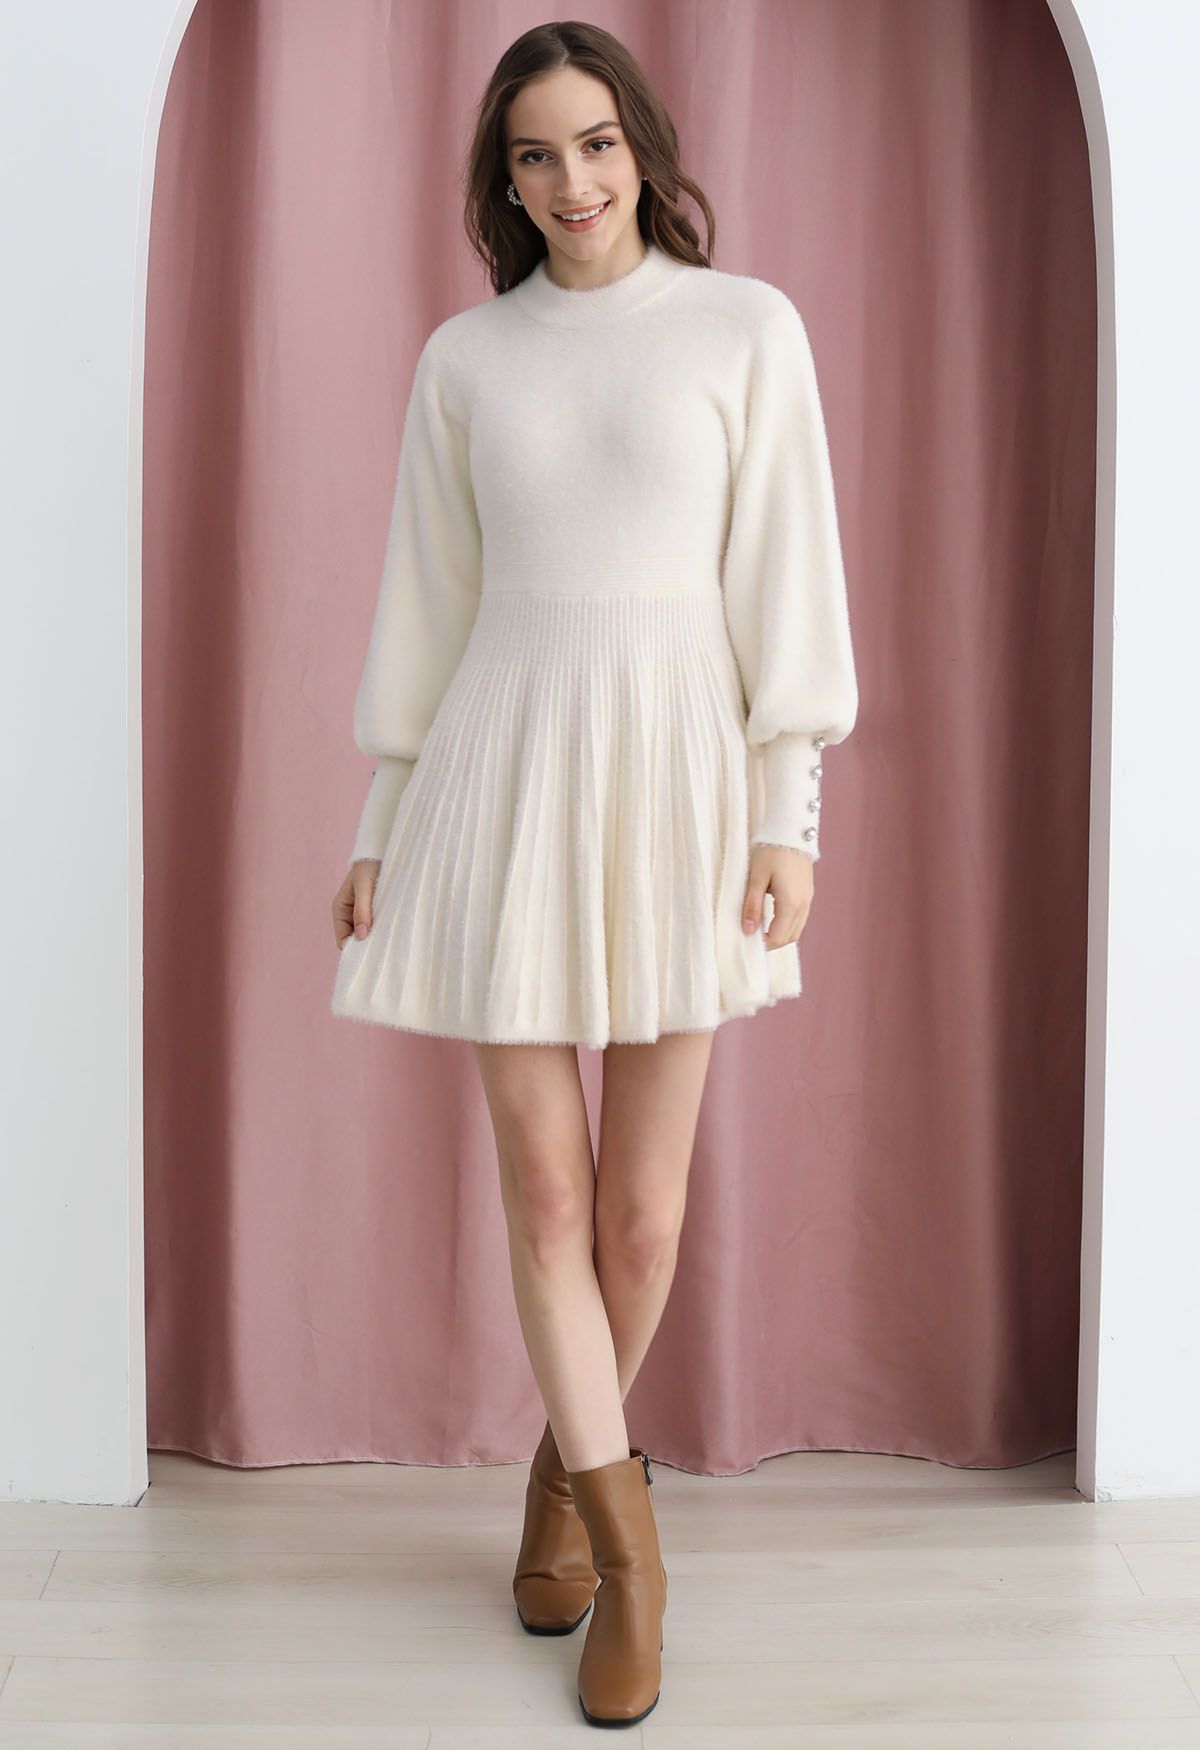 Extra Soft Fuzzy Knit Pleated Dress in Cream